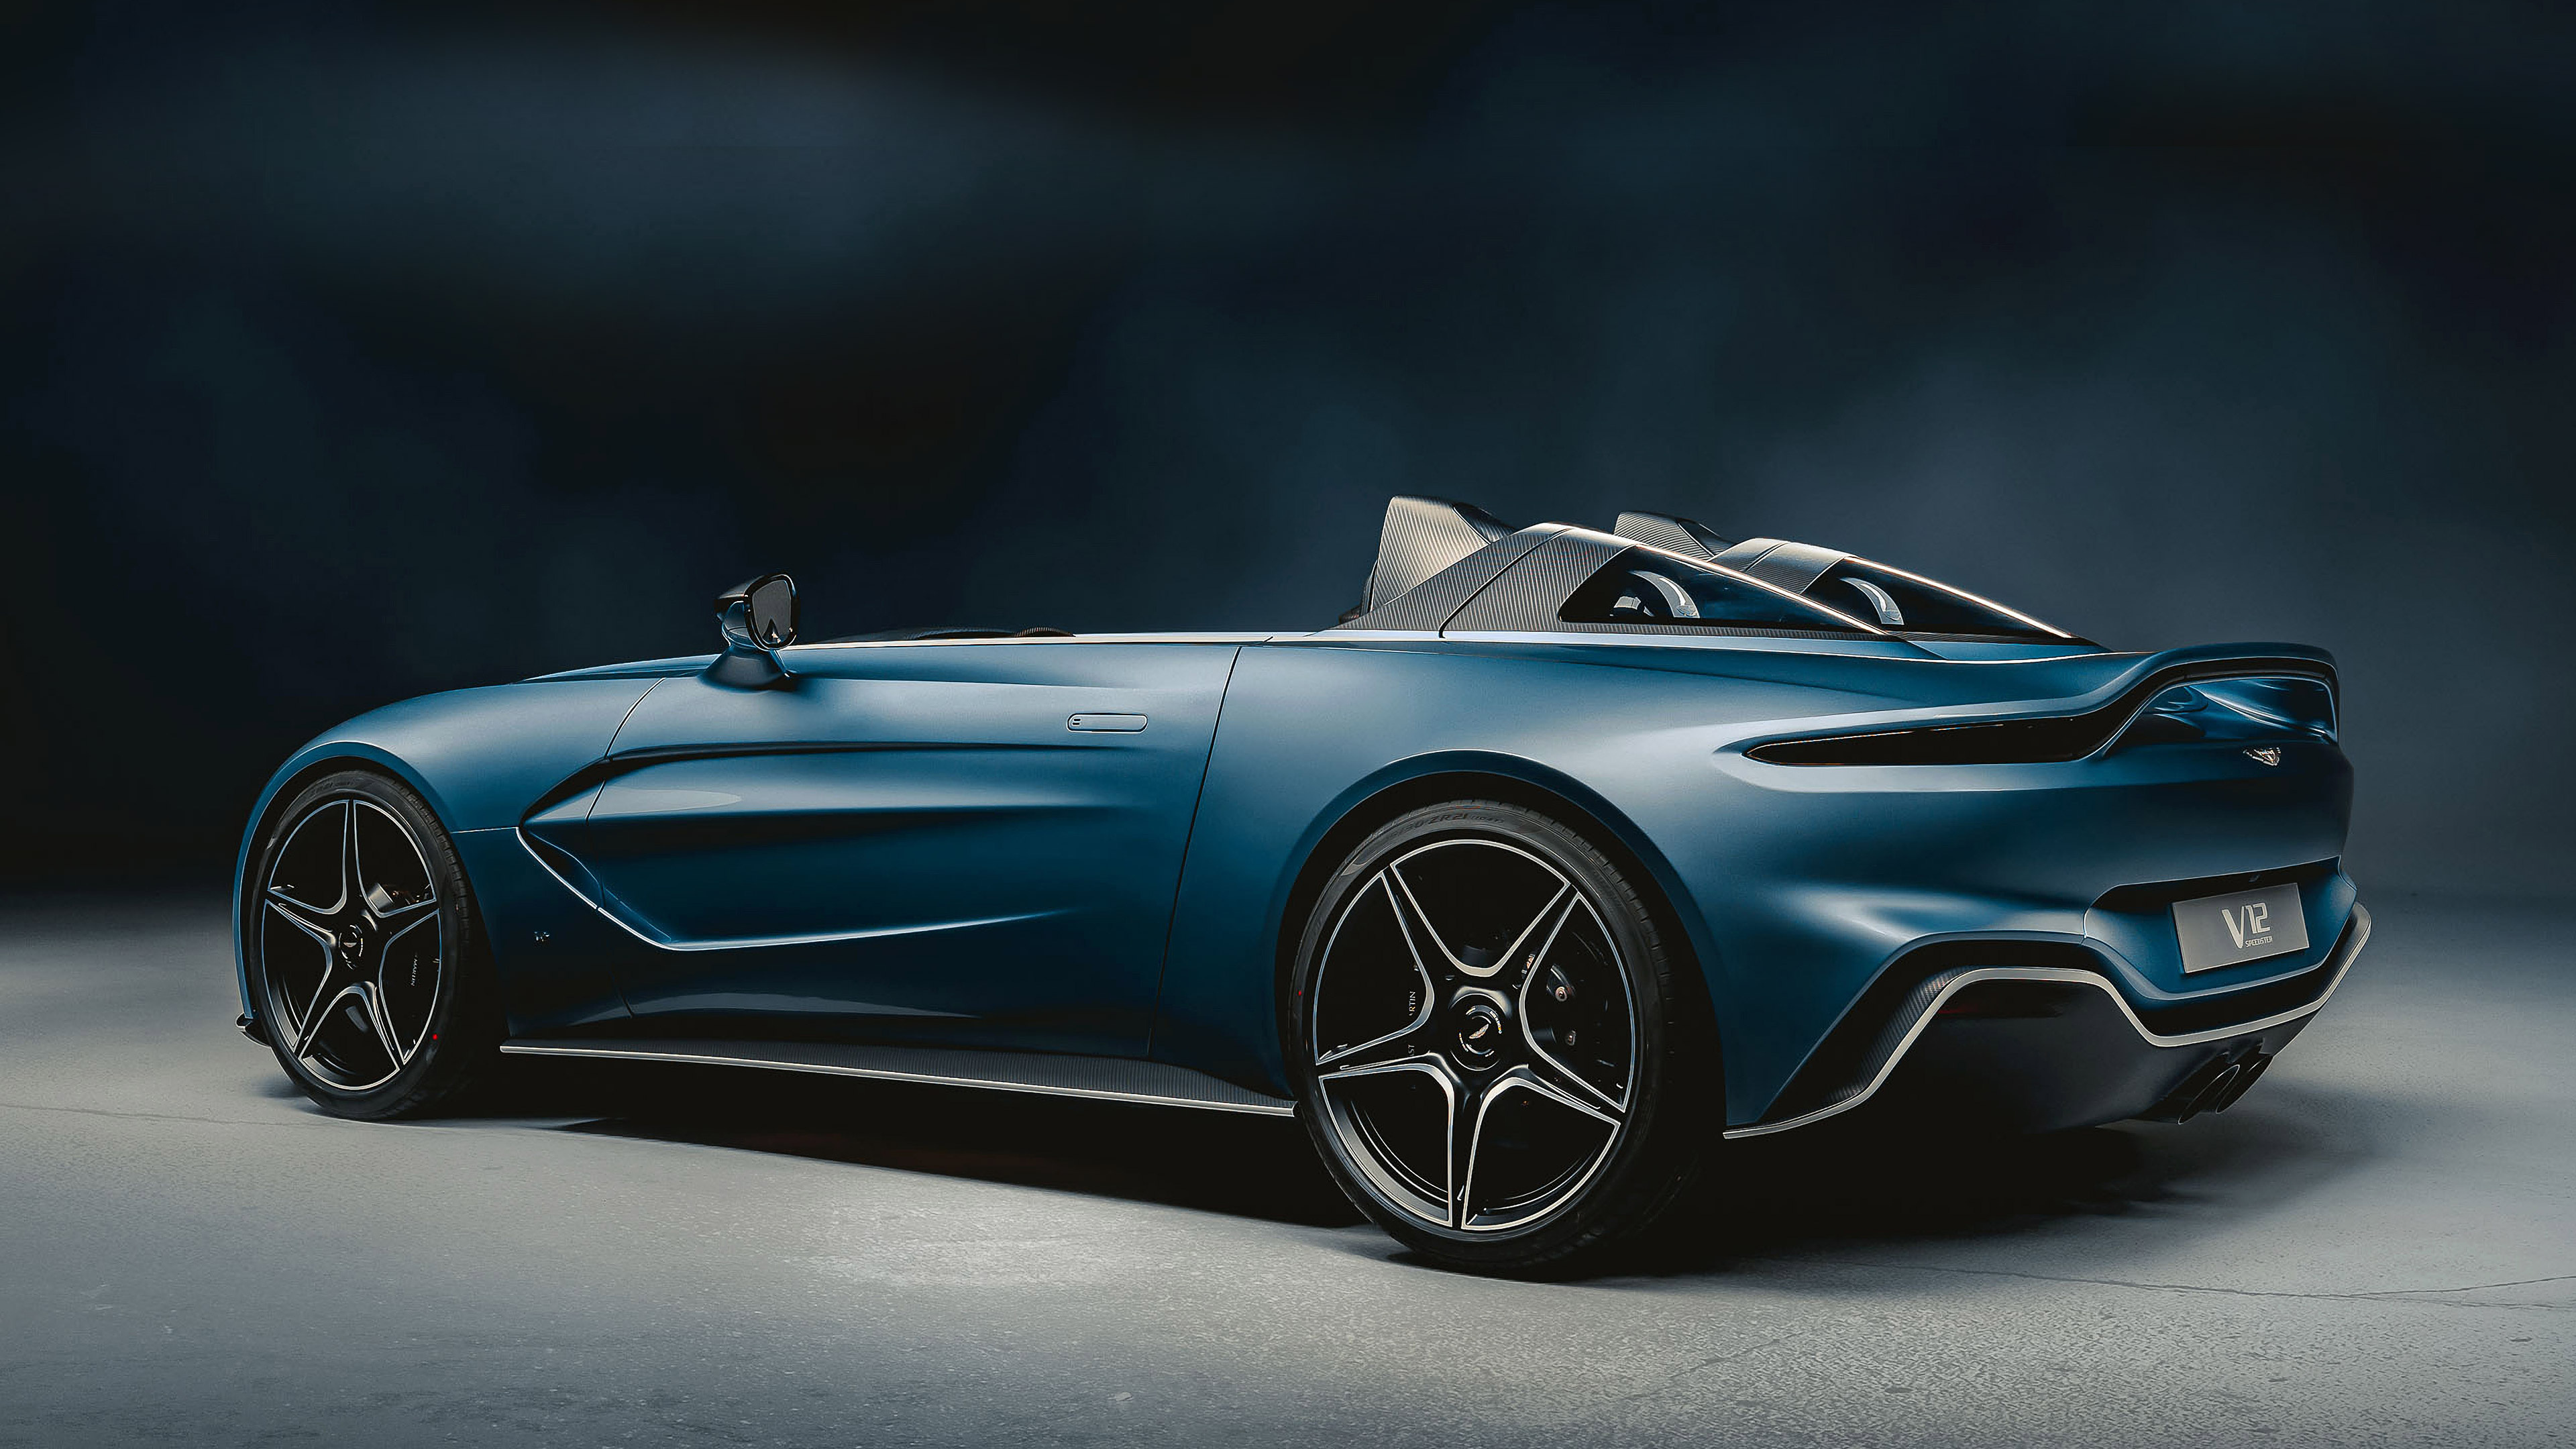 Aston Martin Speedster, Luxury sports car, Astonishing 4K wallpapers, Exclusivity at its finest, 3840x2160 4K Desktop